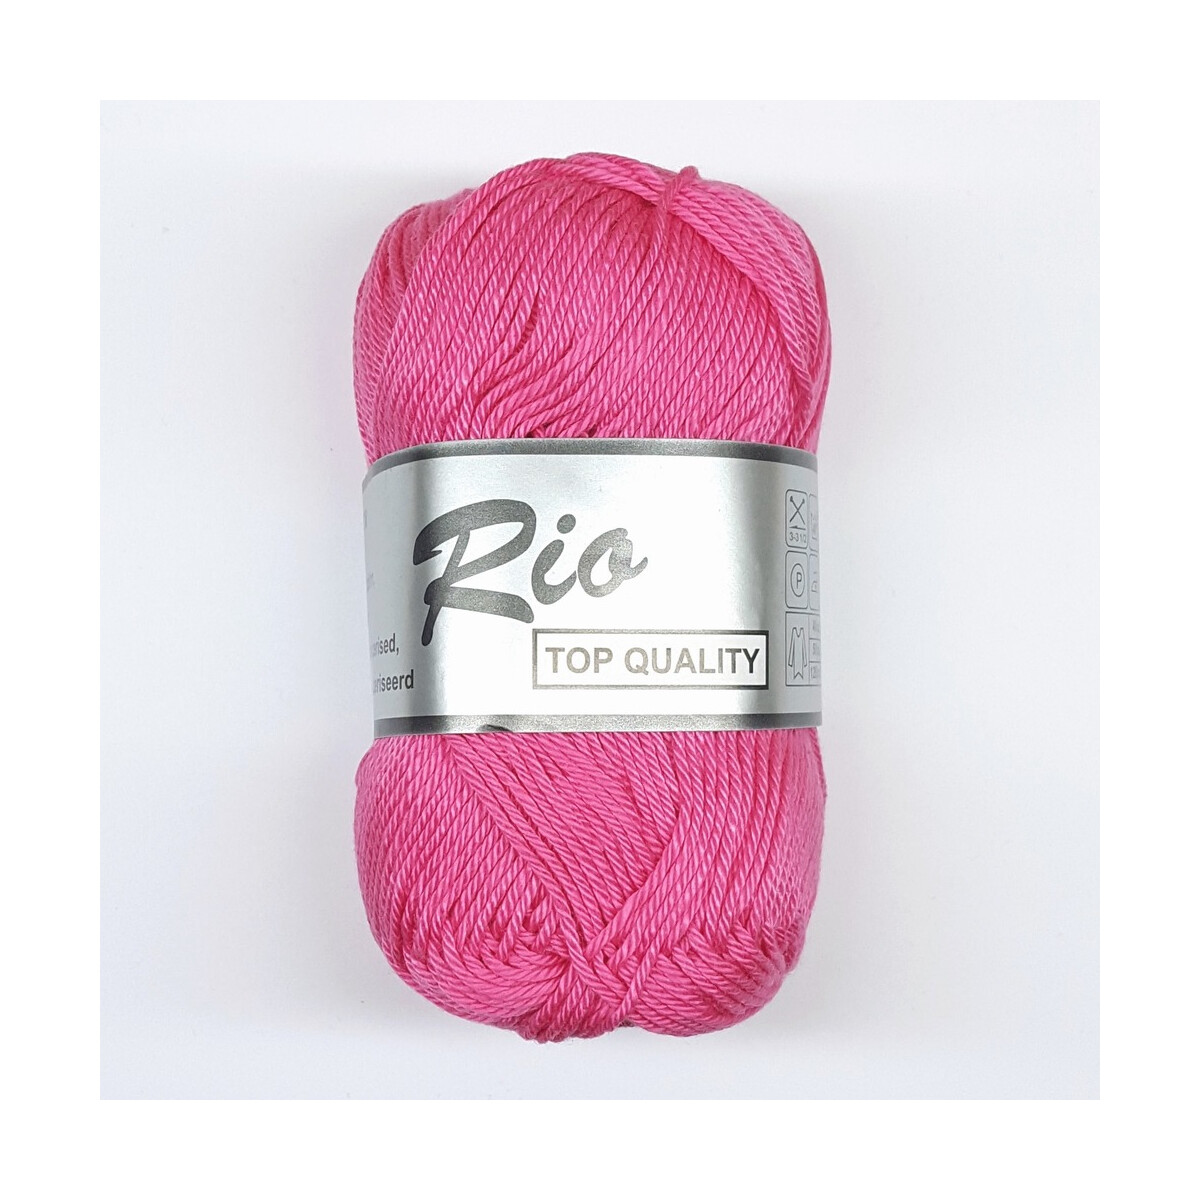 Lammy Rio Baumwollgarn 50 g Pink